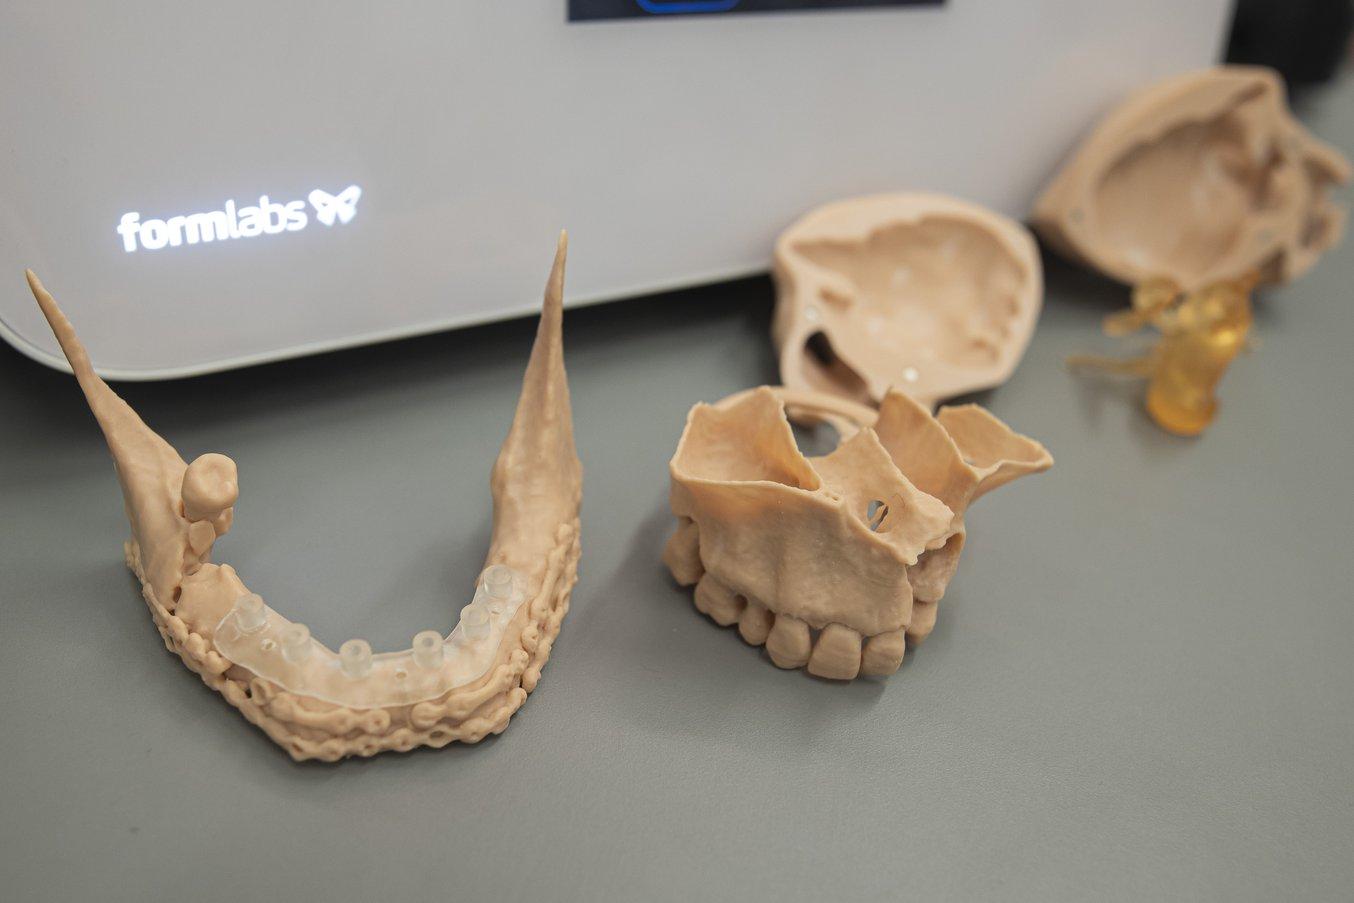 3D printed anatomical models at SE3D - Semmelweis University.